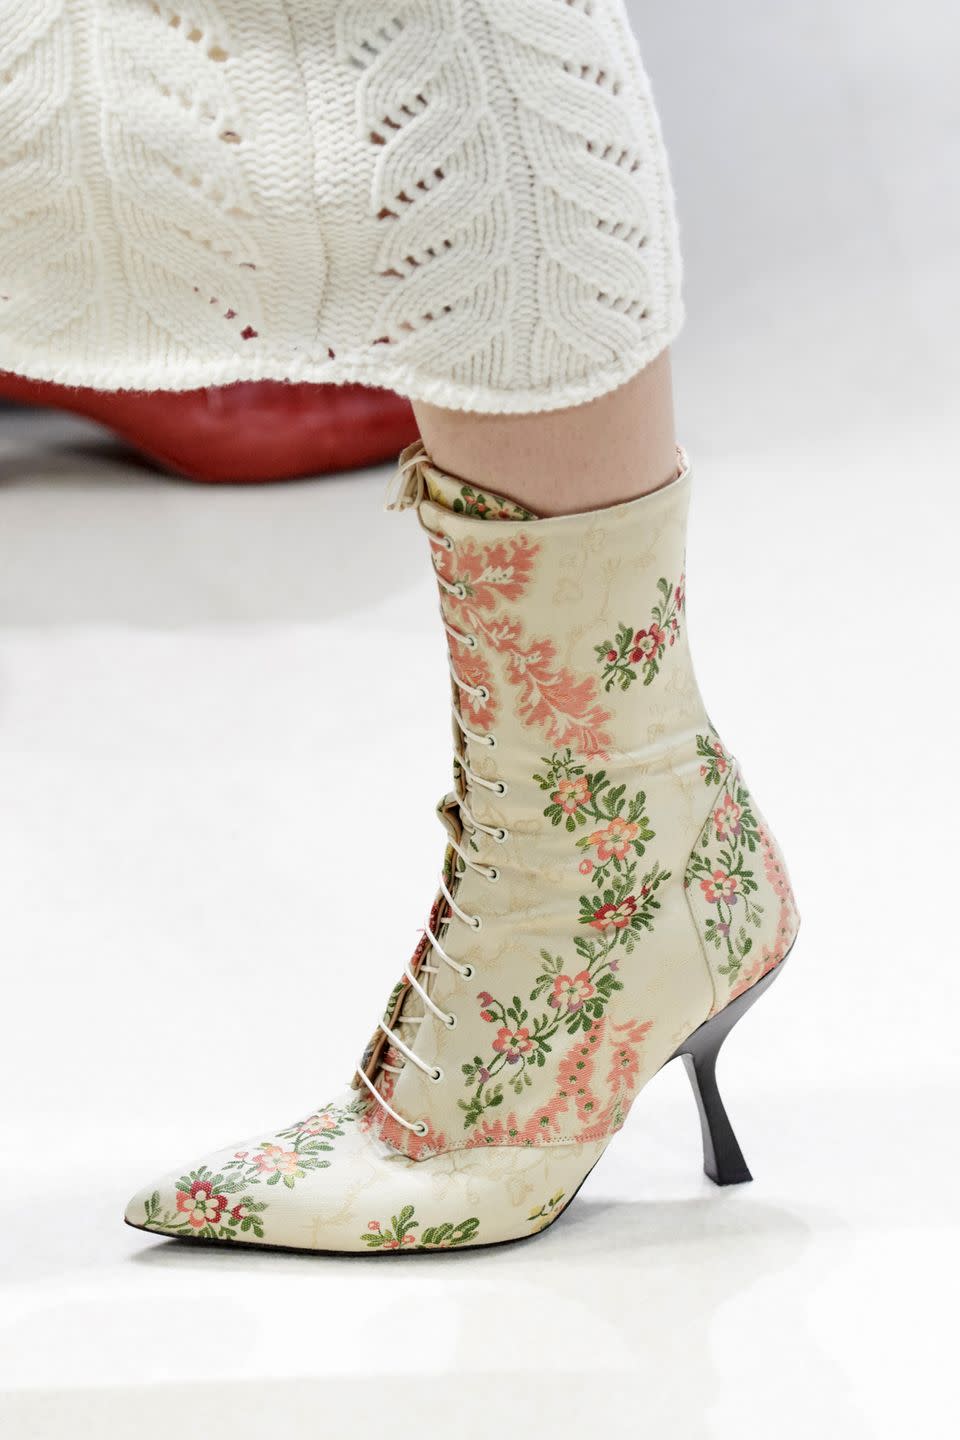 16) Floral-Print Boots